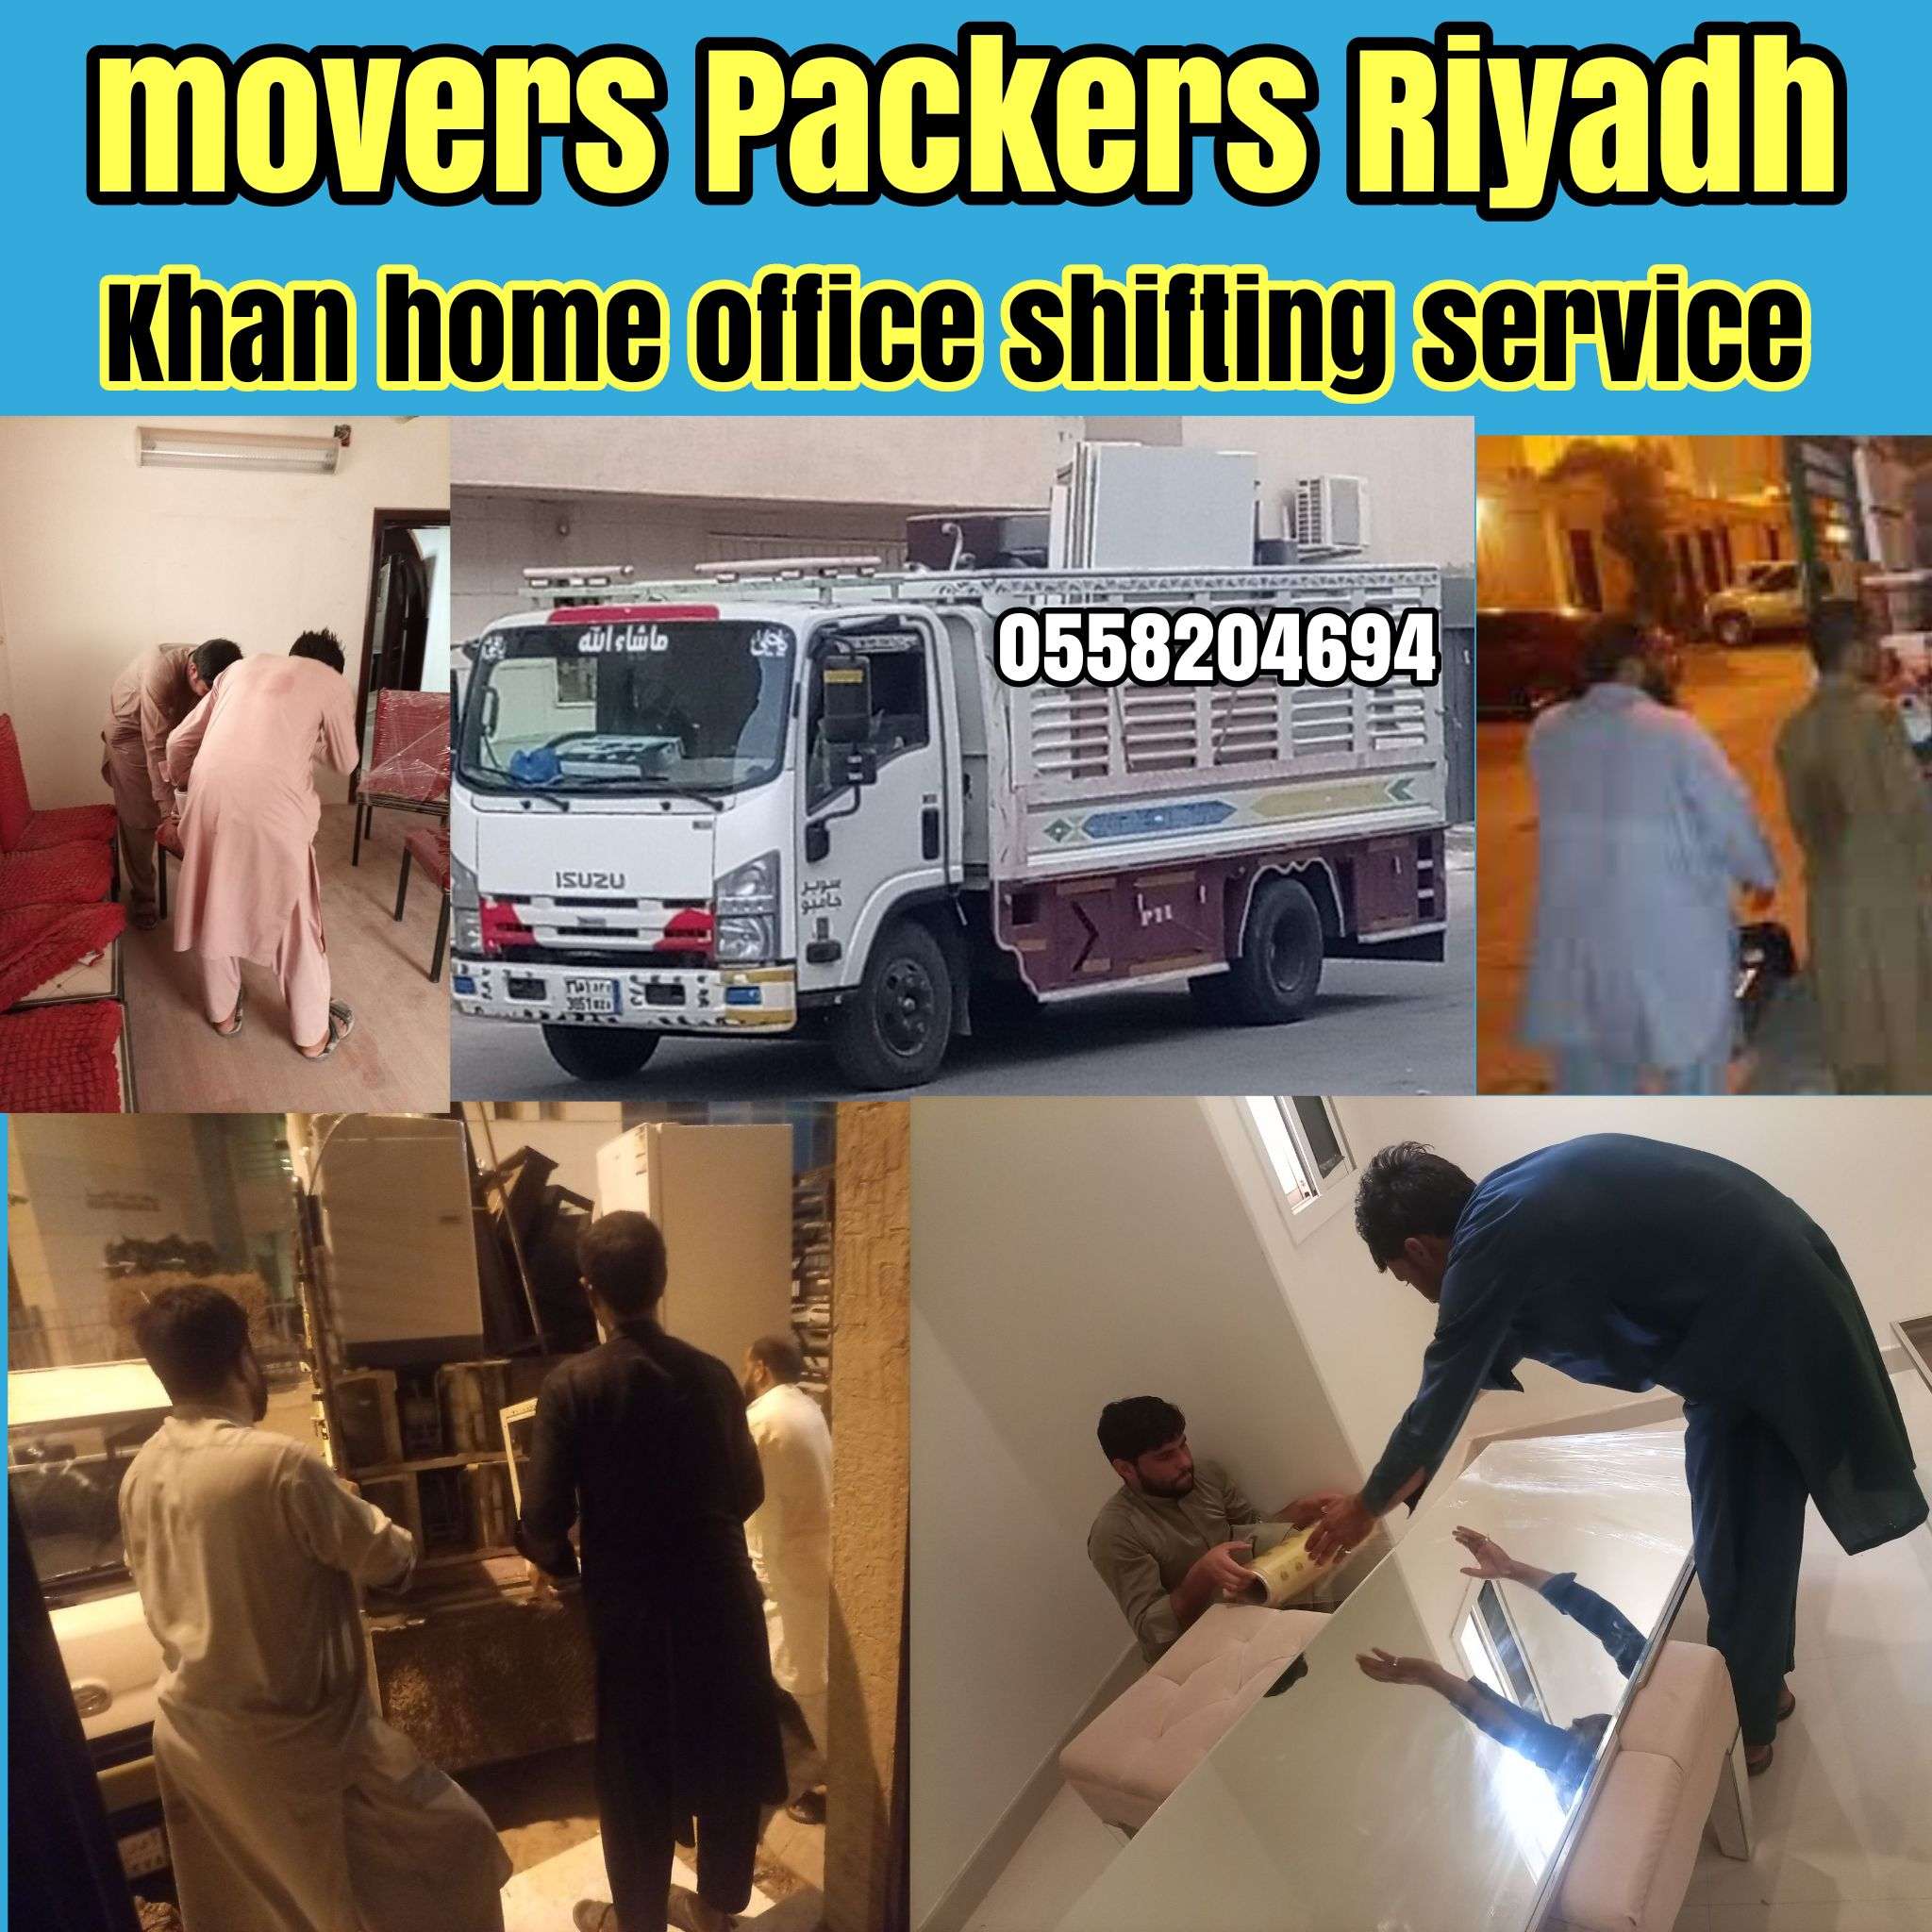 KHAN MOVERS PACKERS COMPANY RIYADH, HOME OFFICE SHIFTING COMPANY RIYADH